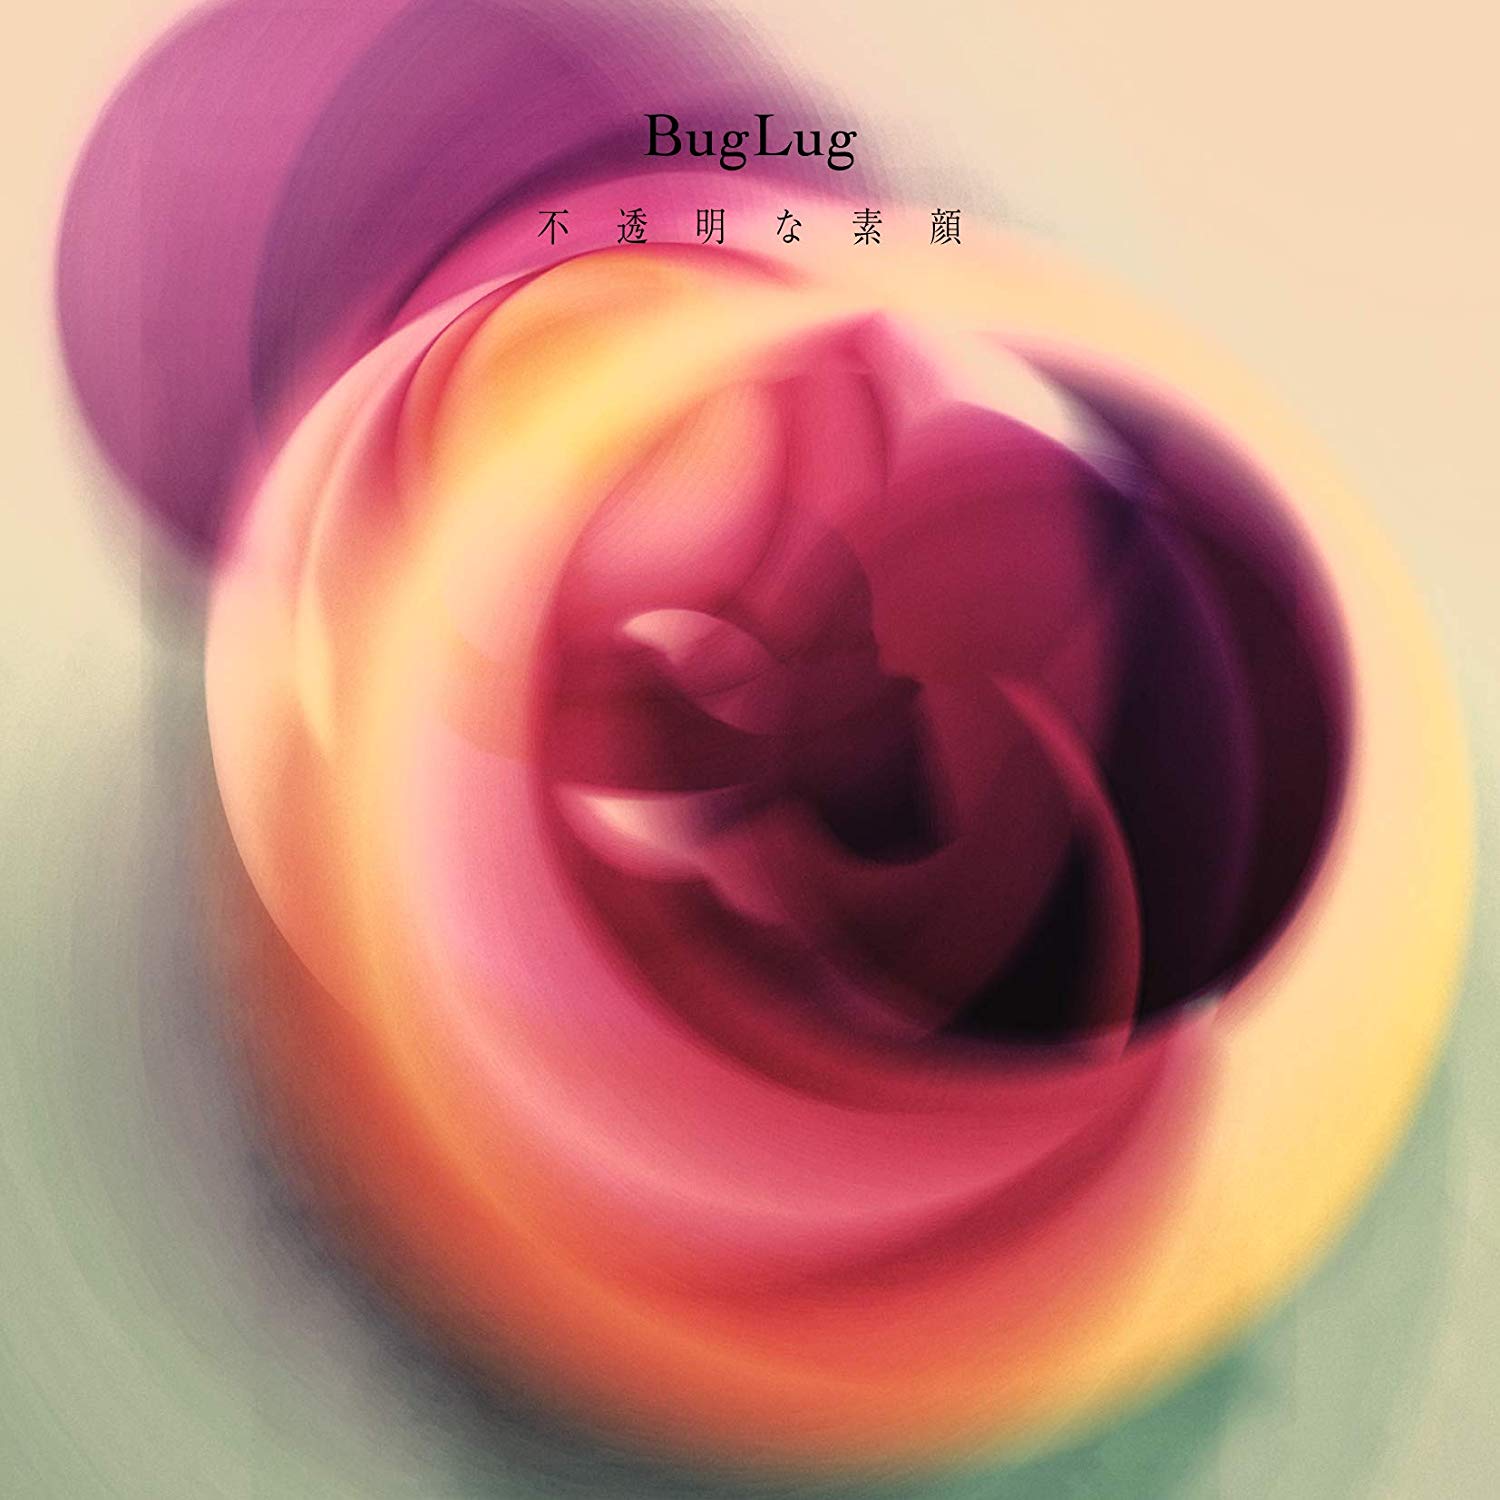 The Opaque Real Face 不透明な素顔収録 Buglugの歌詞 Rock Lyric ロック特化型無料歌詞検索サービス